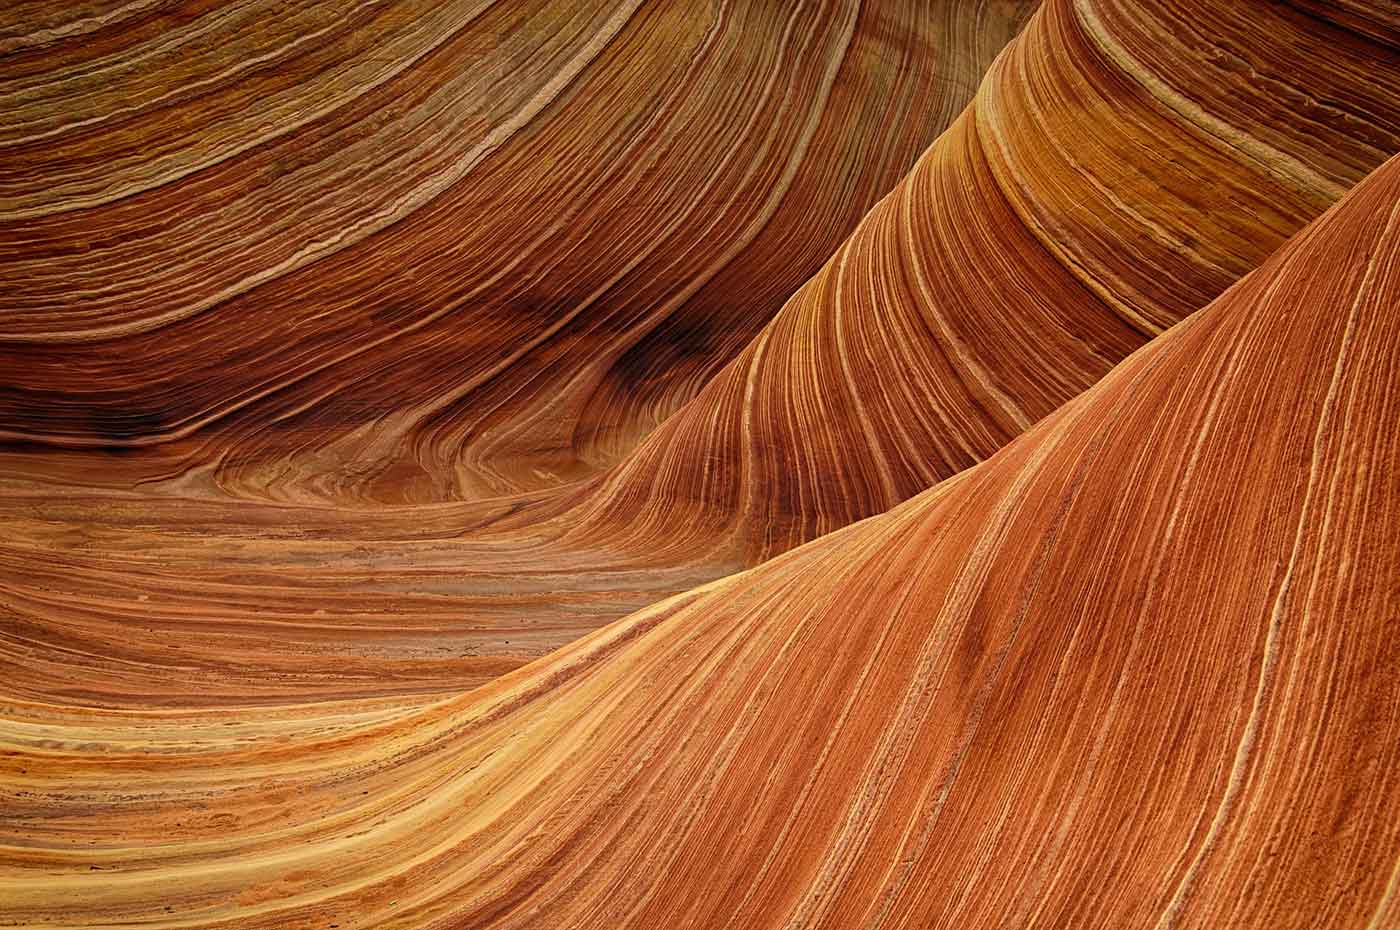 Sandstone waves